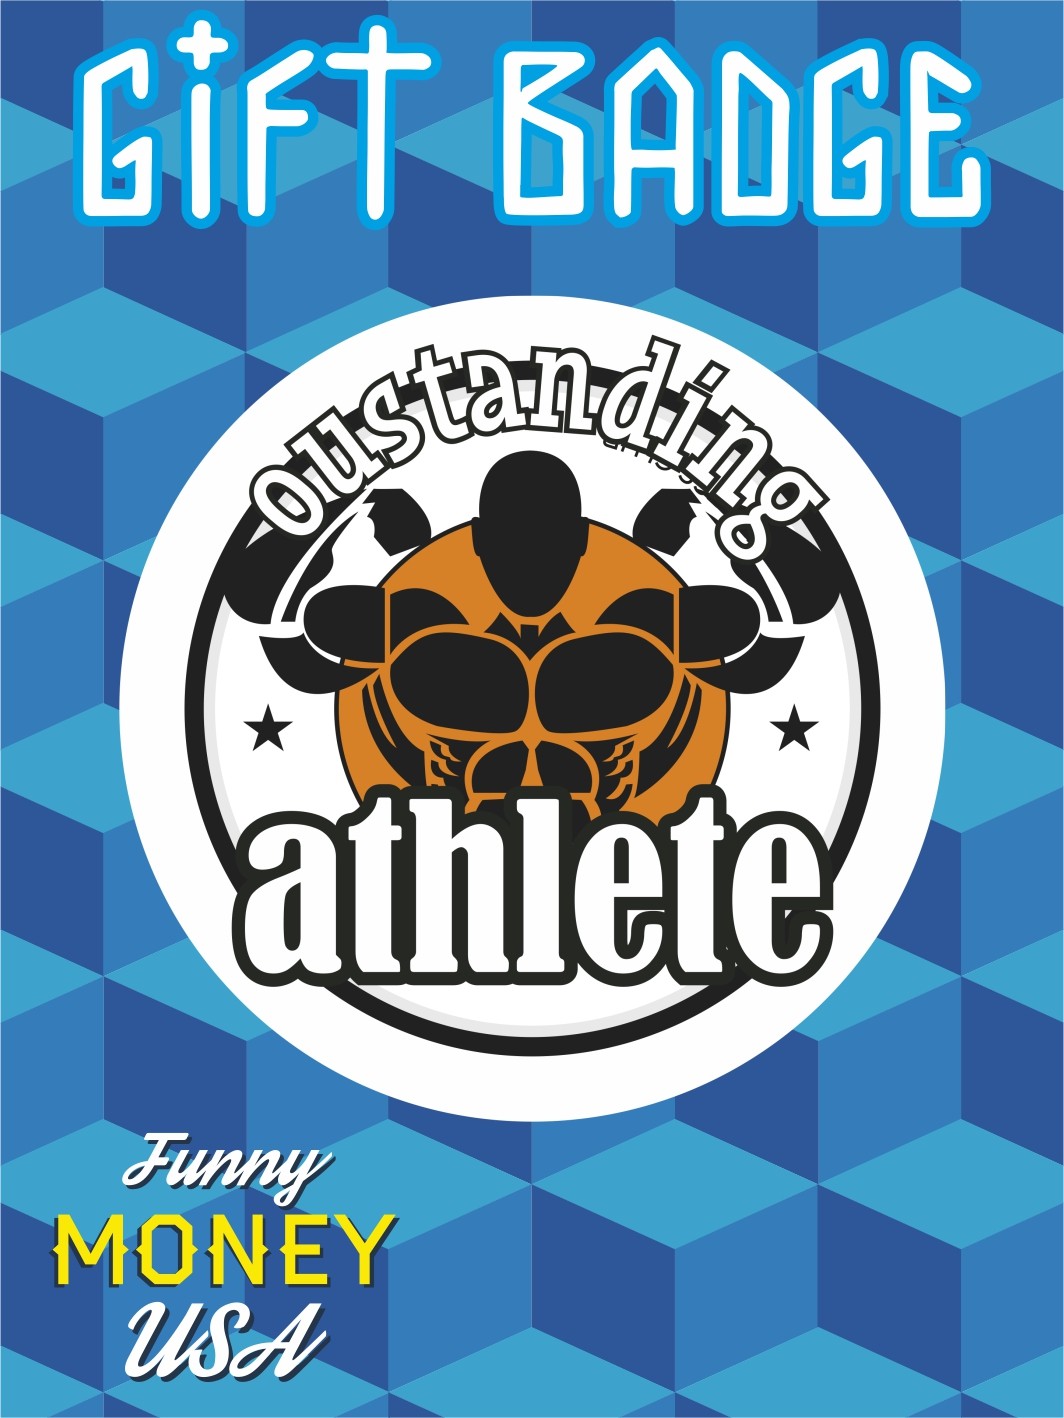 Gift badges "Oustanding athlete"